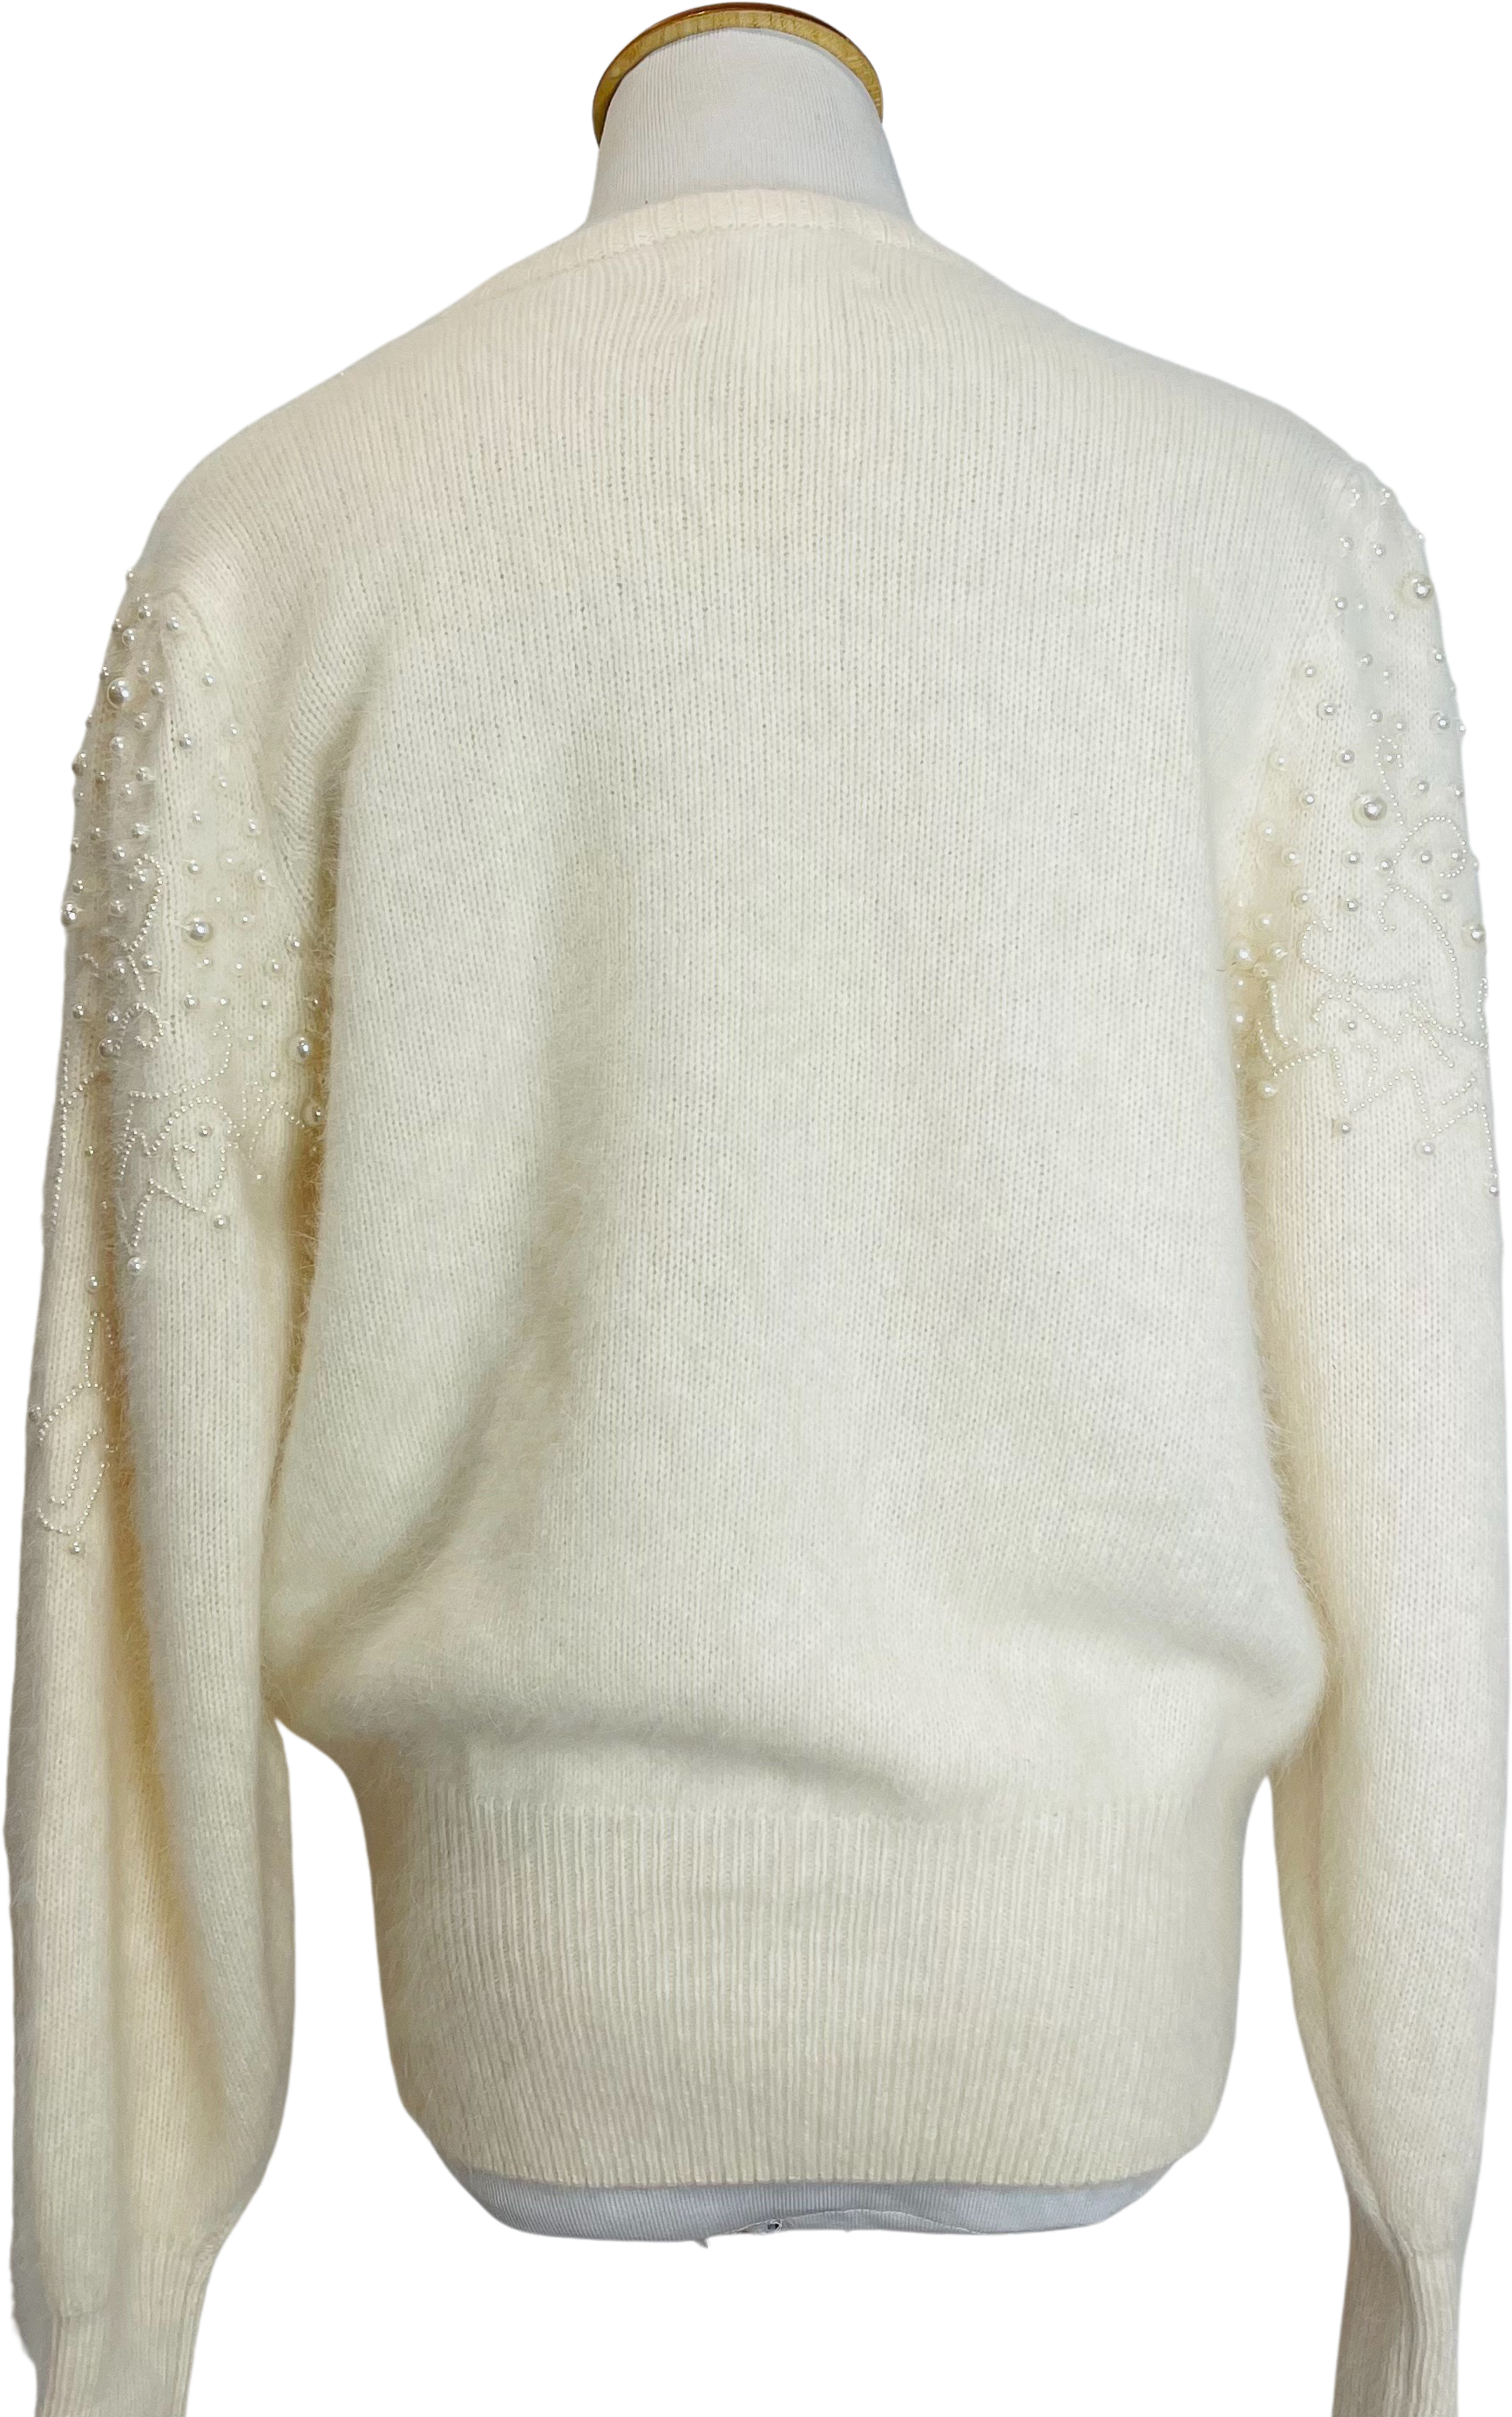 90s Angora Sweater 90s Womens Medium Fuzzy Angora Pastel Cardigan Sweater Sweater, 90s Womens Pastel Fair aisle Cardigan